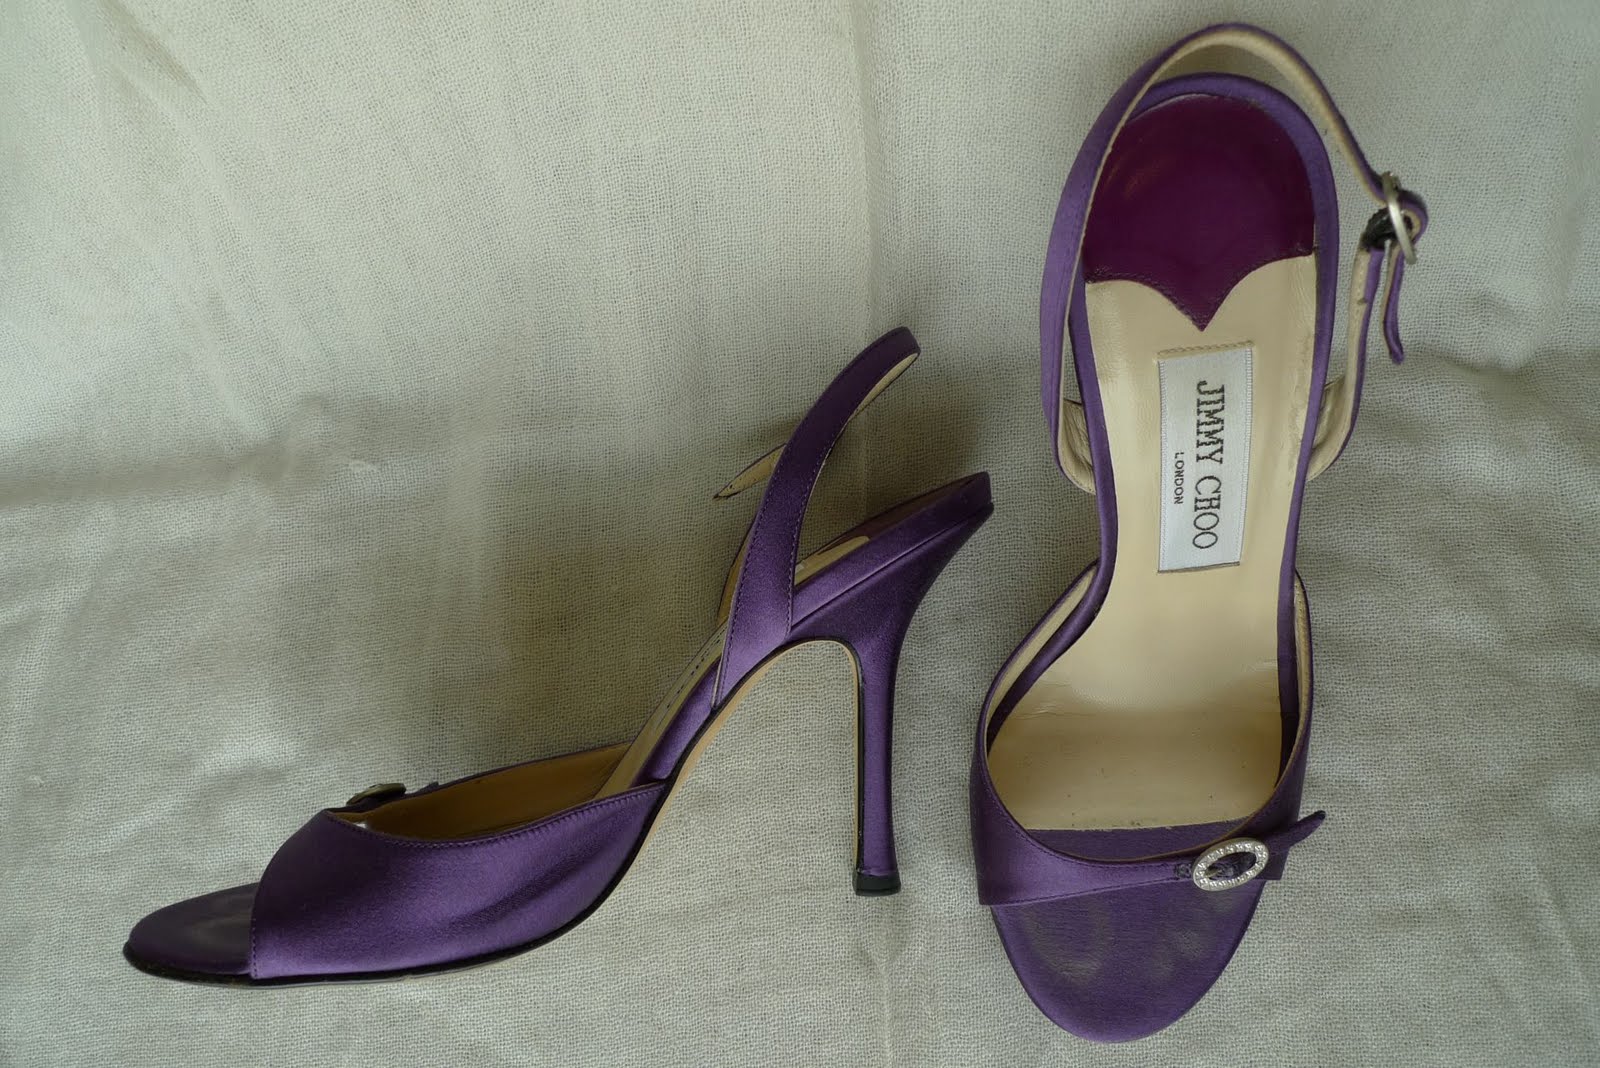 purple wedding shoes for bride